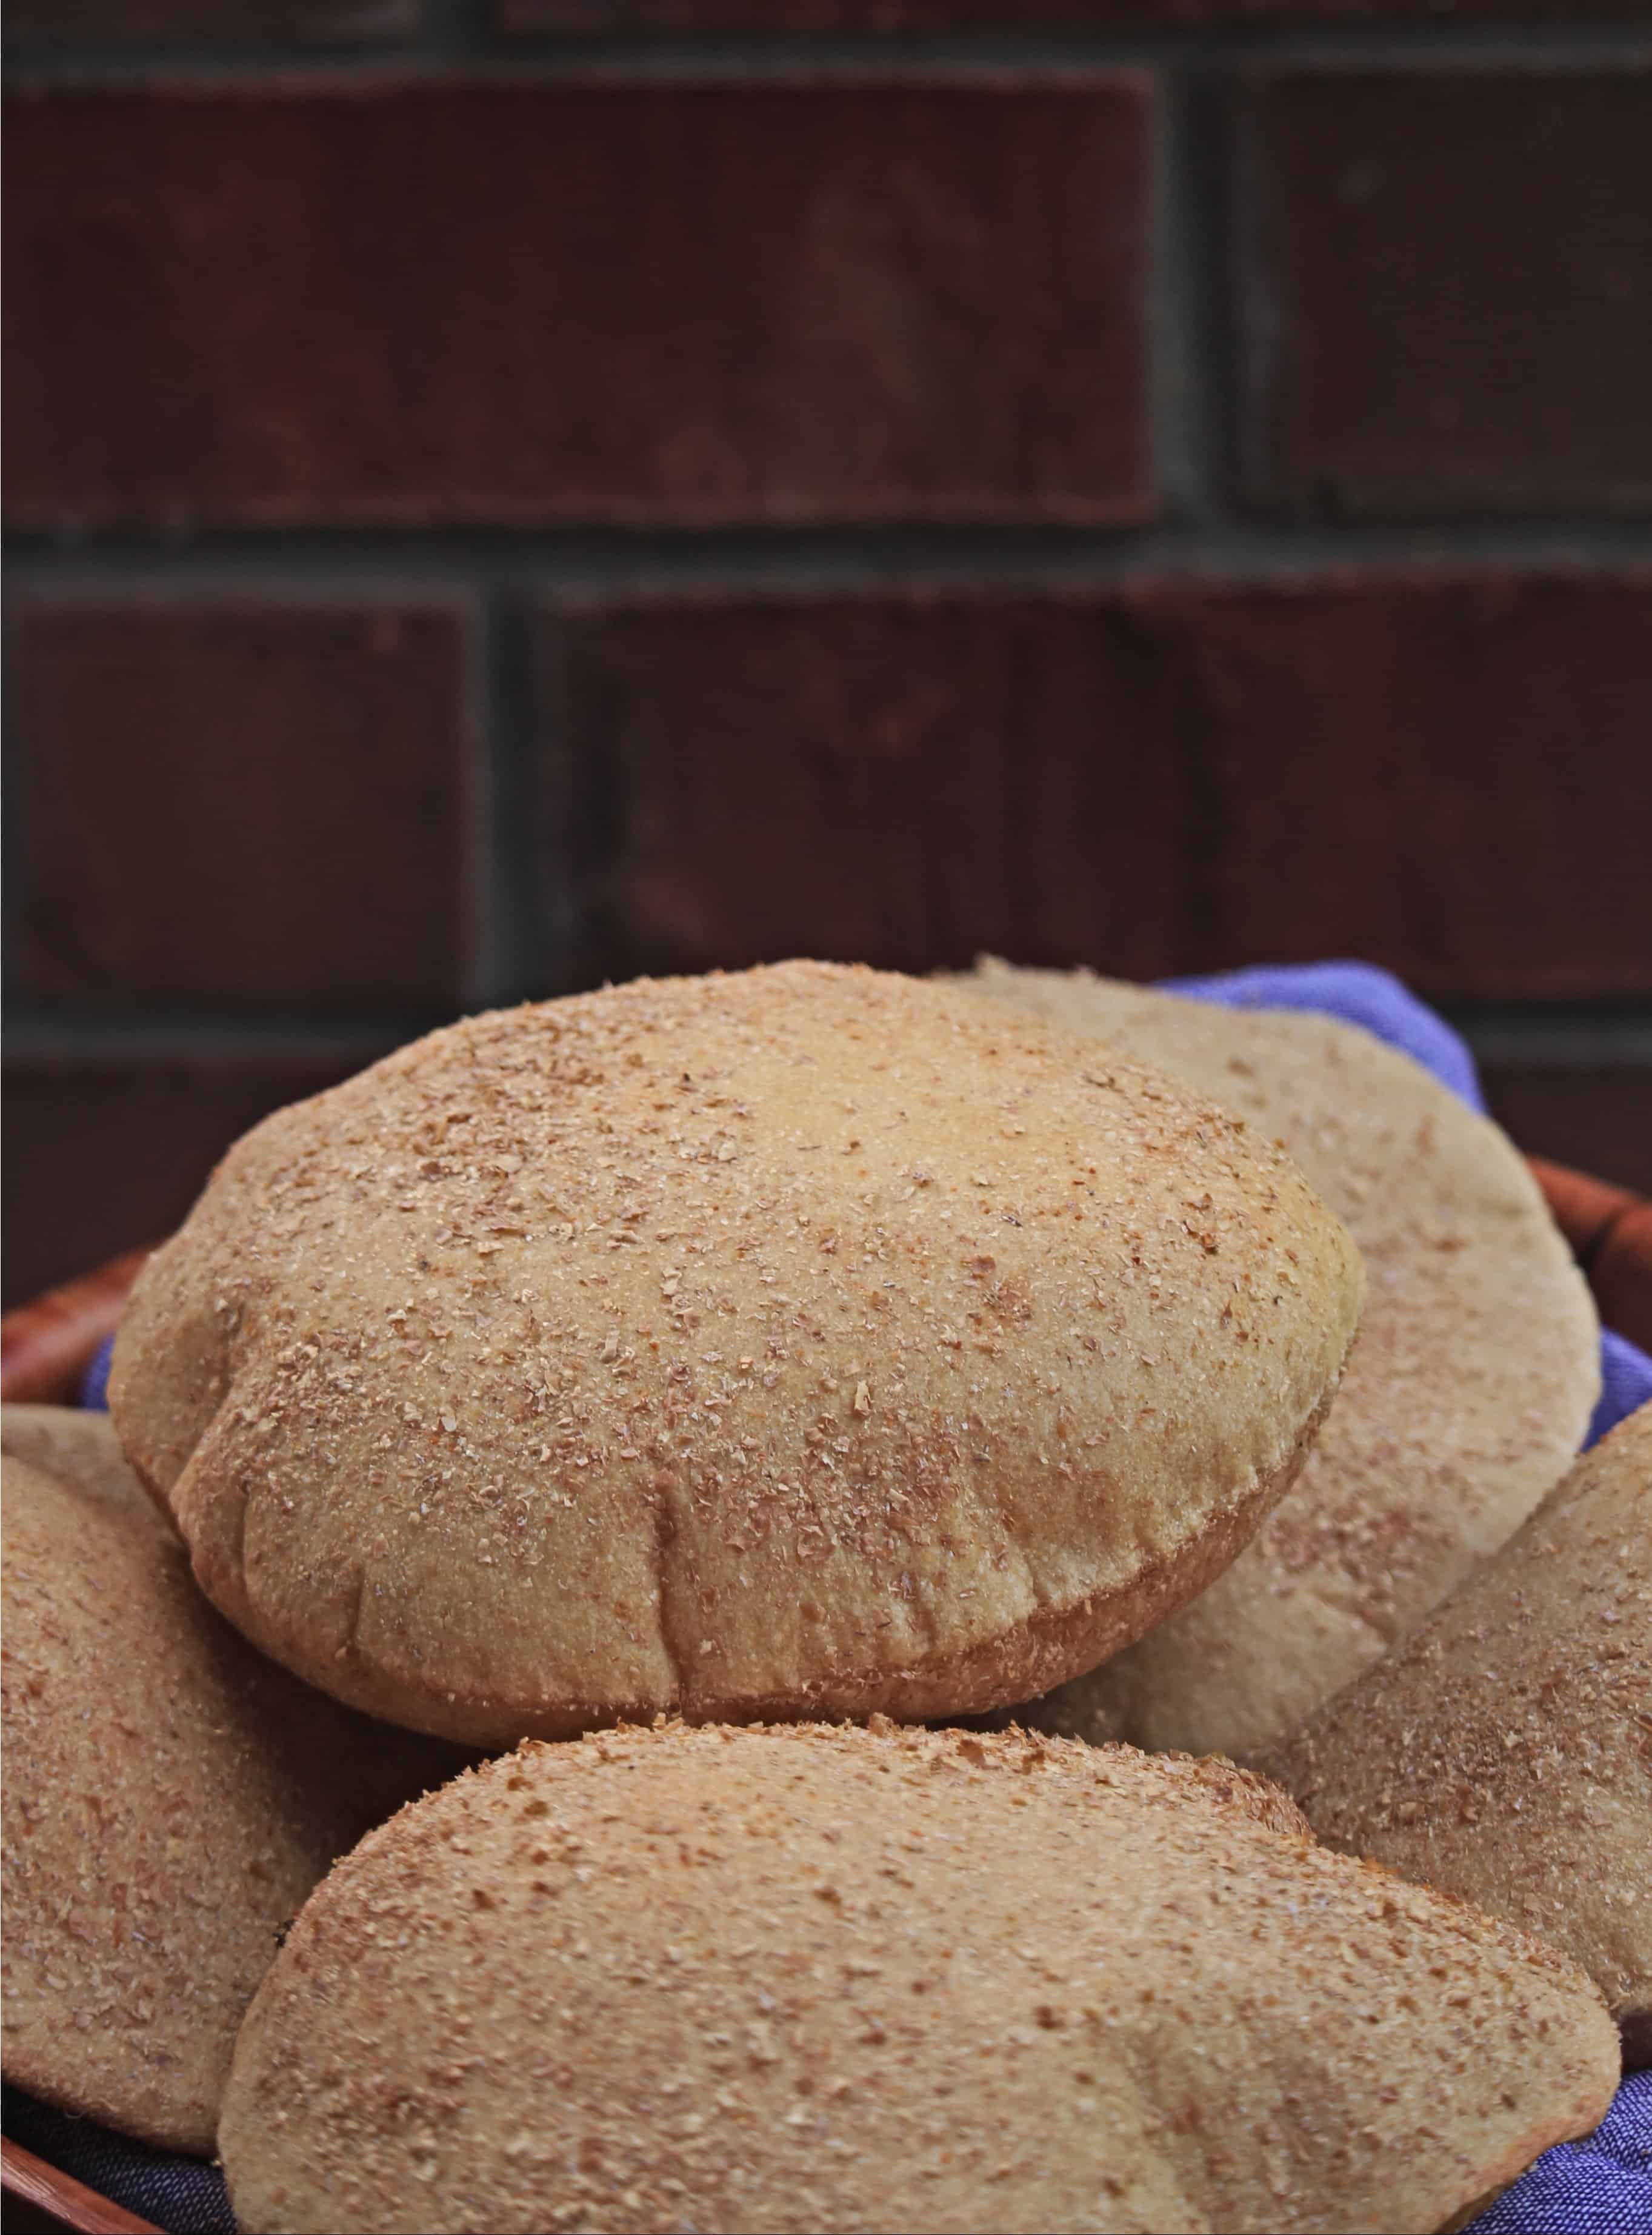 Rustic flatbread coated with wheat bran